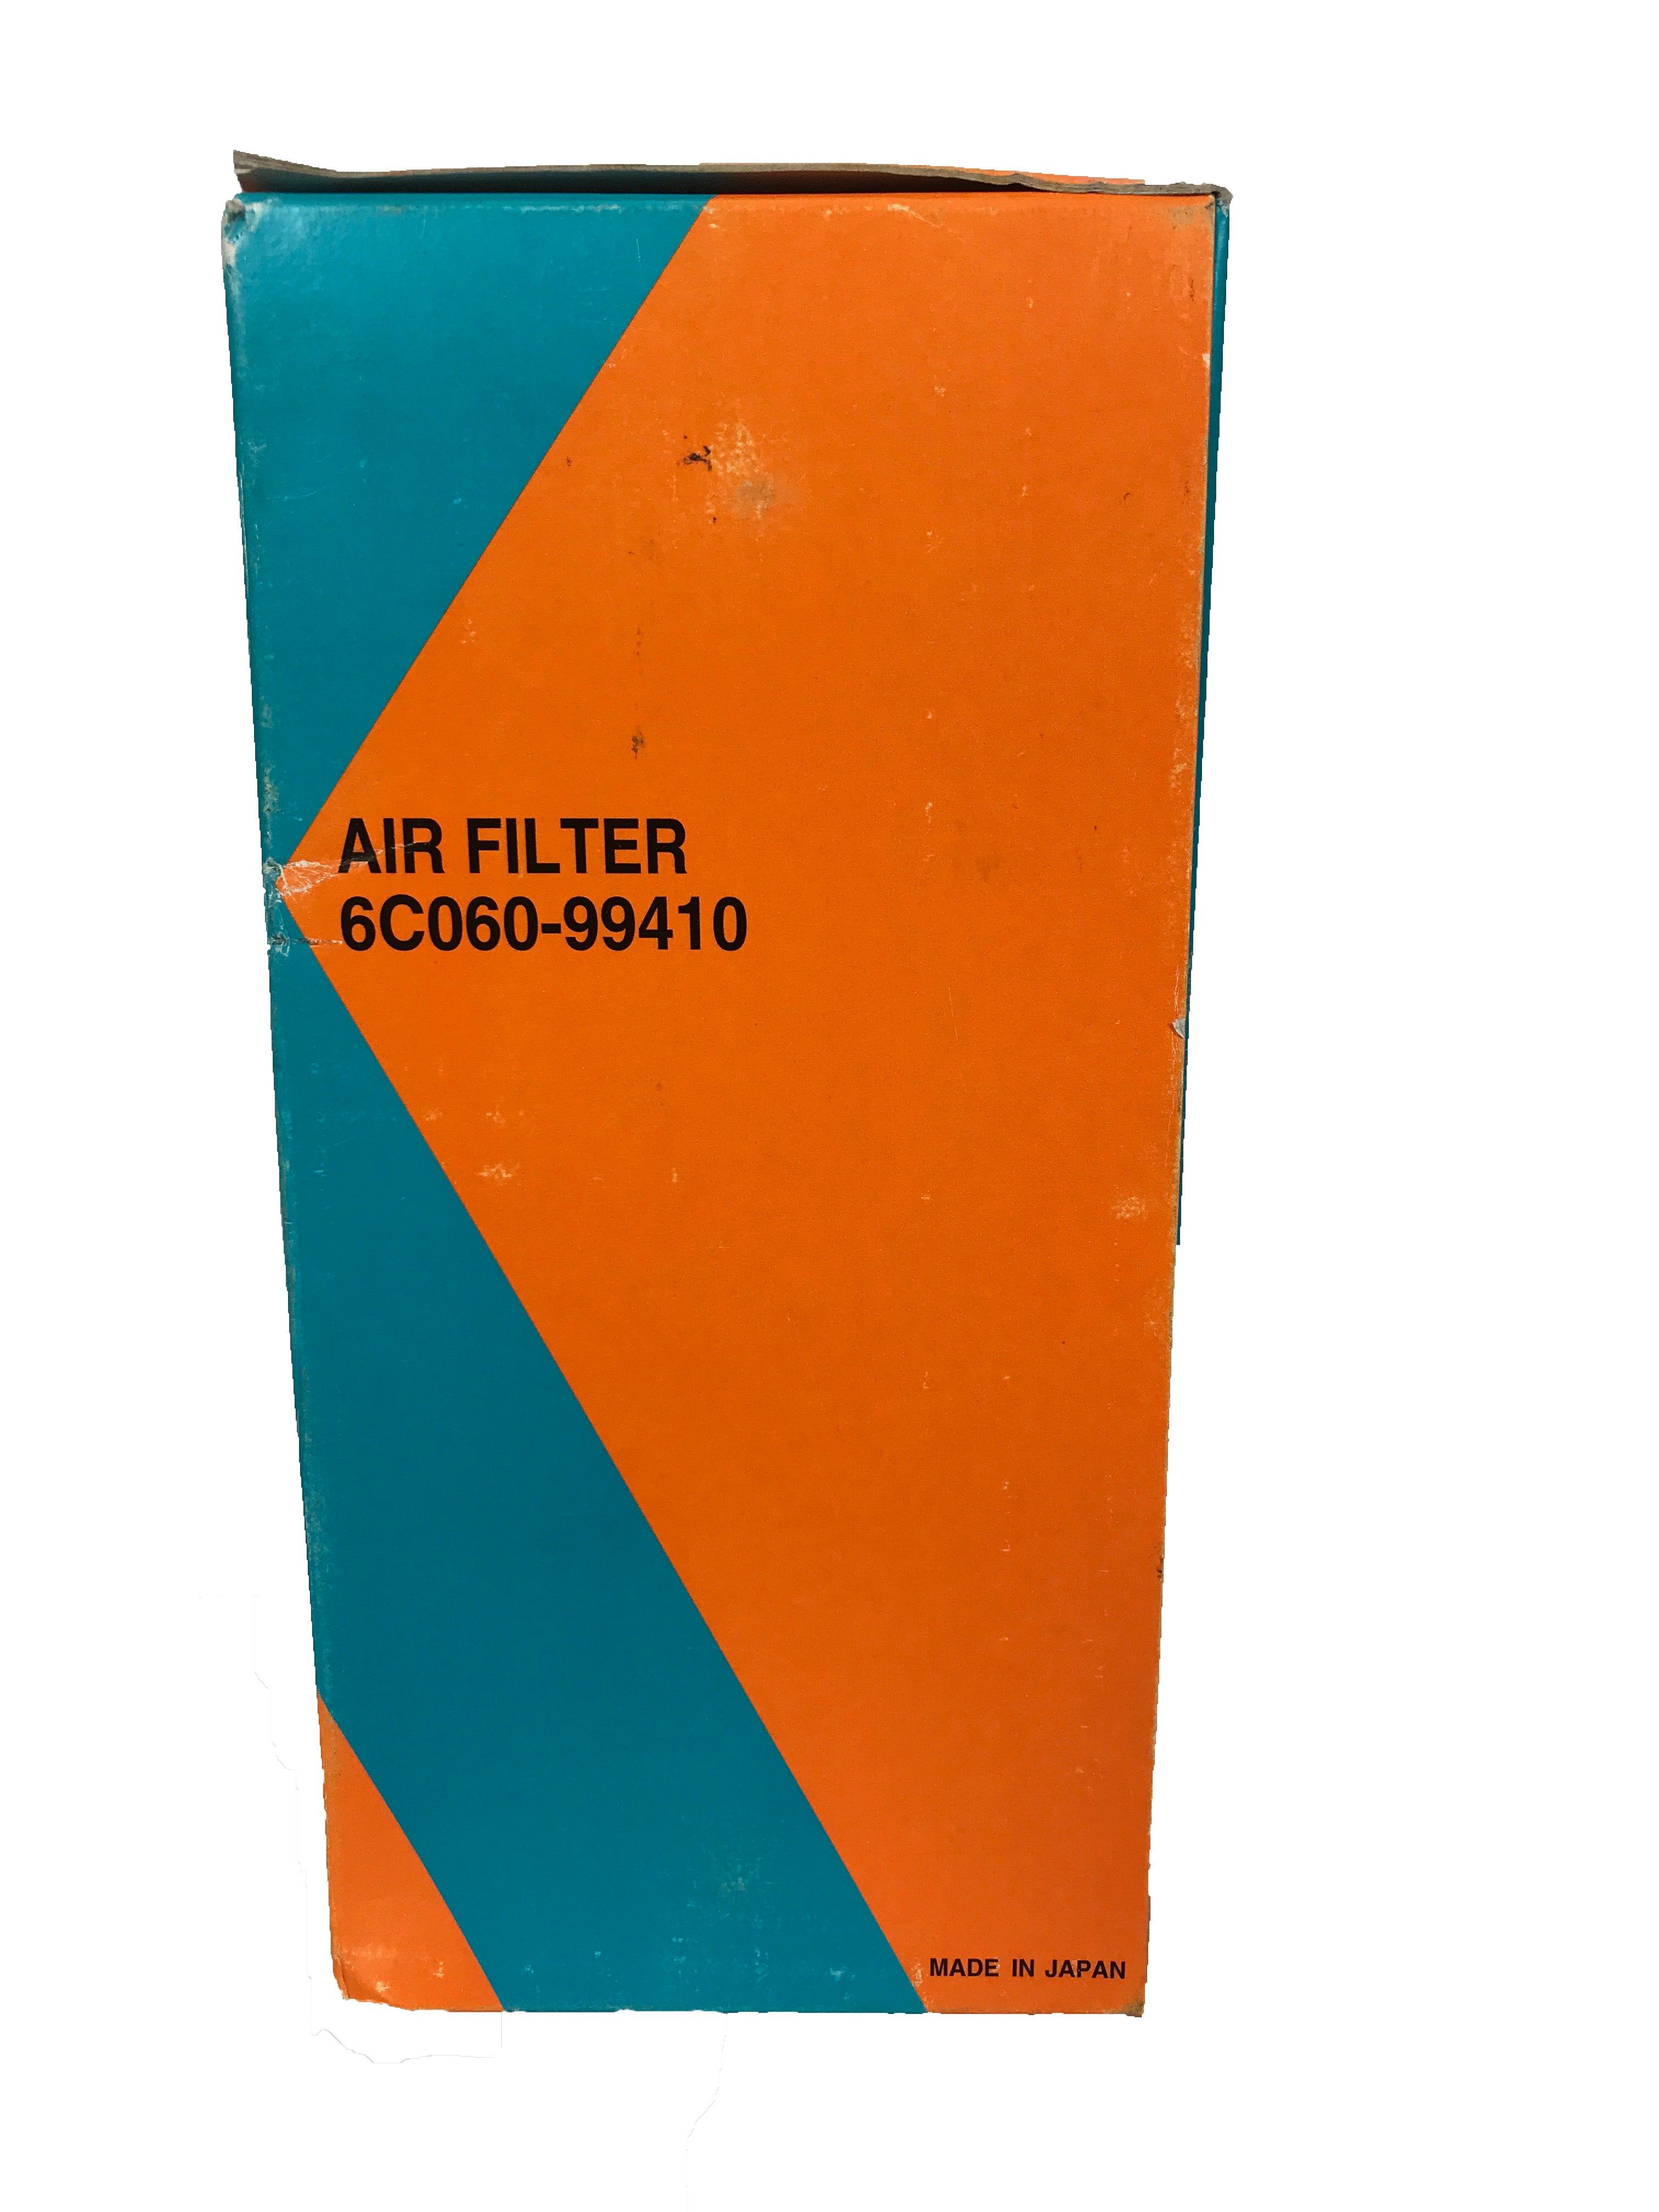 Genuine Kubota OEM Air Filter 6C060-99410 *NEW*